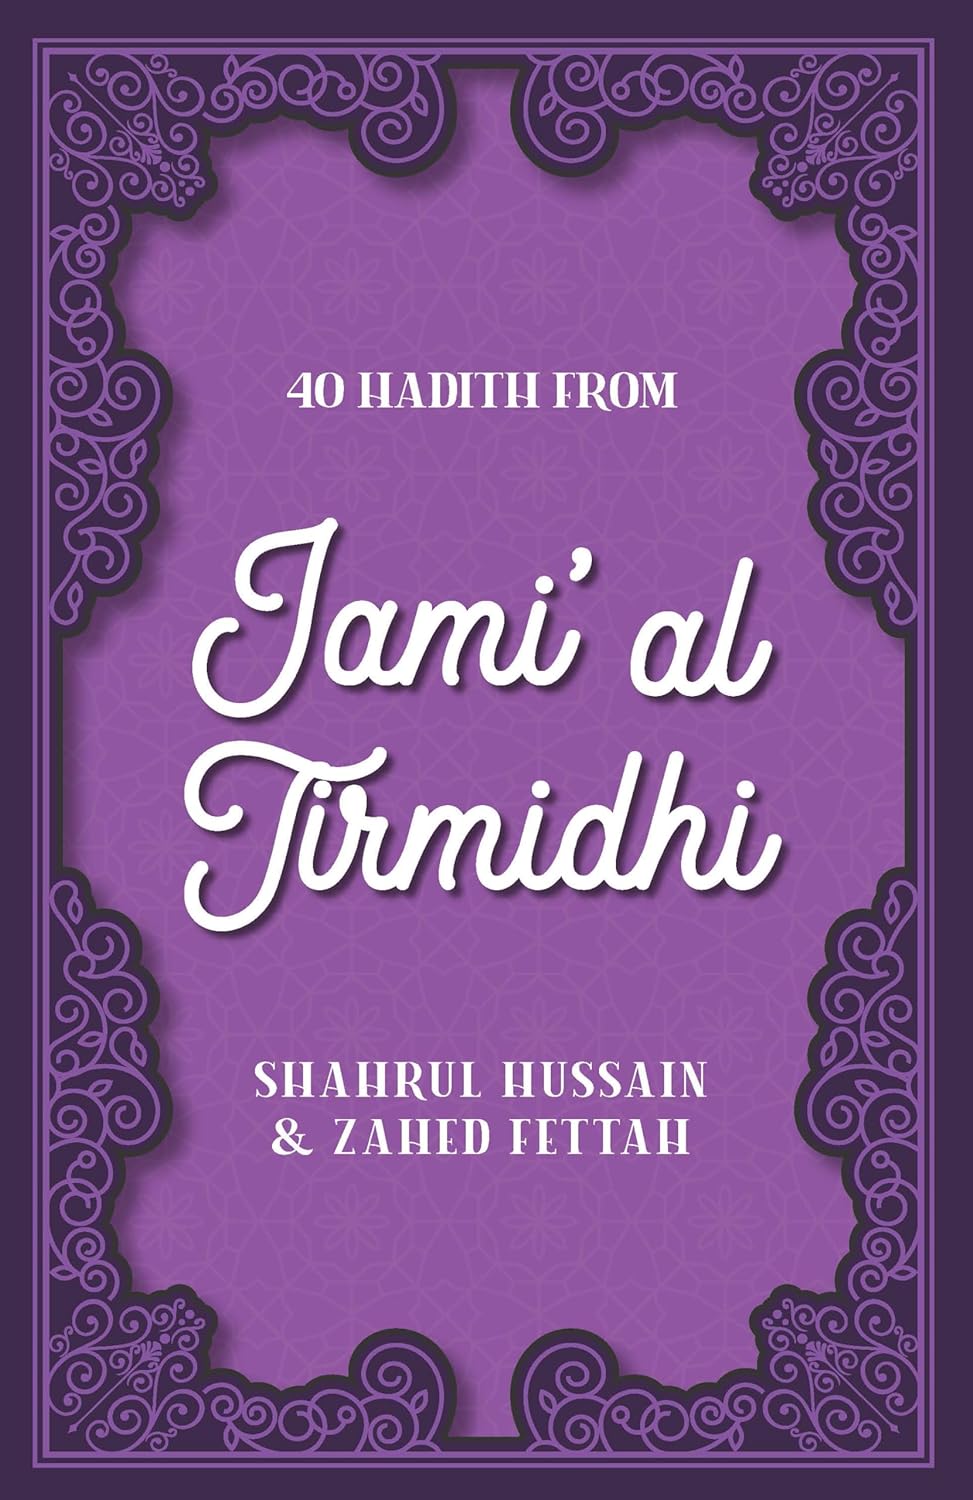 40 Hadith From Jami' al-Tirmidhi